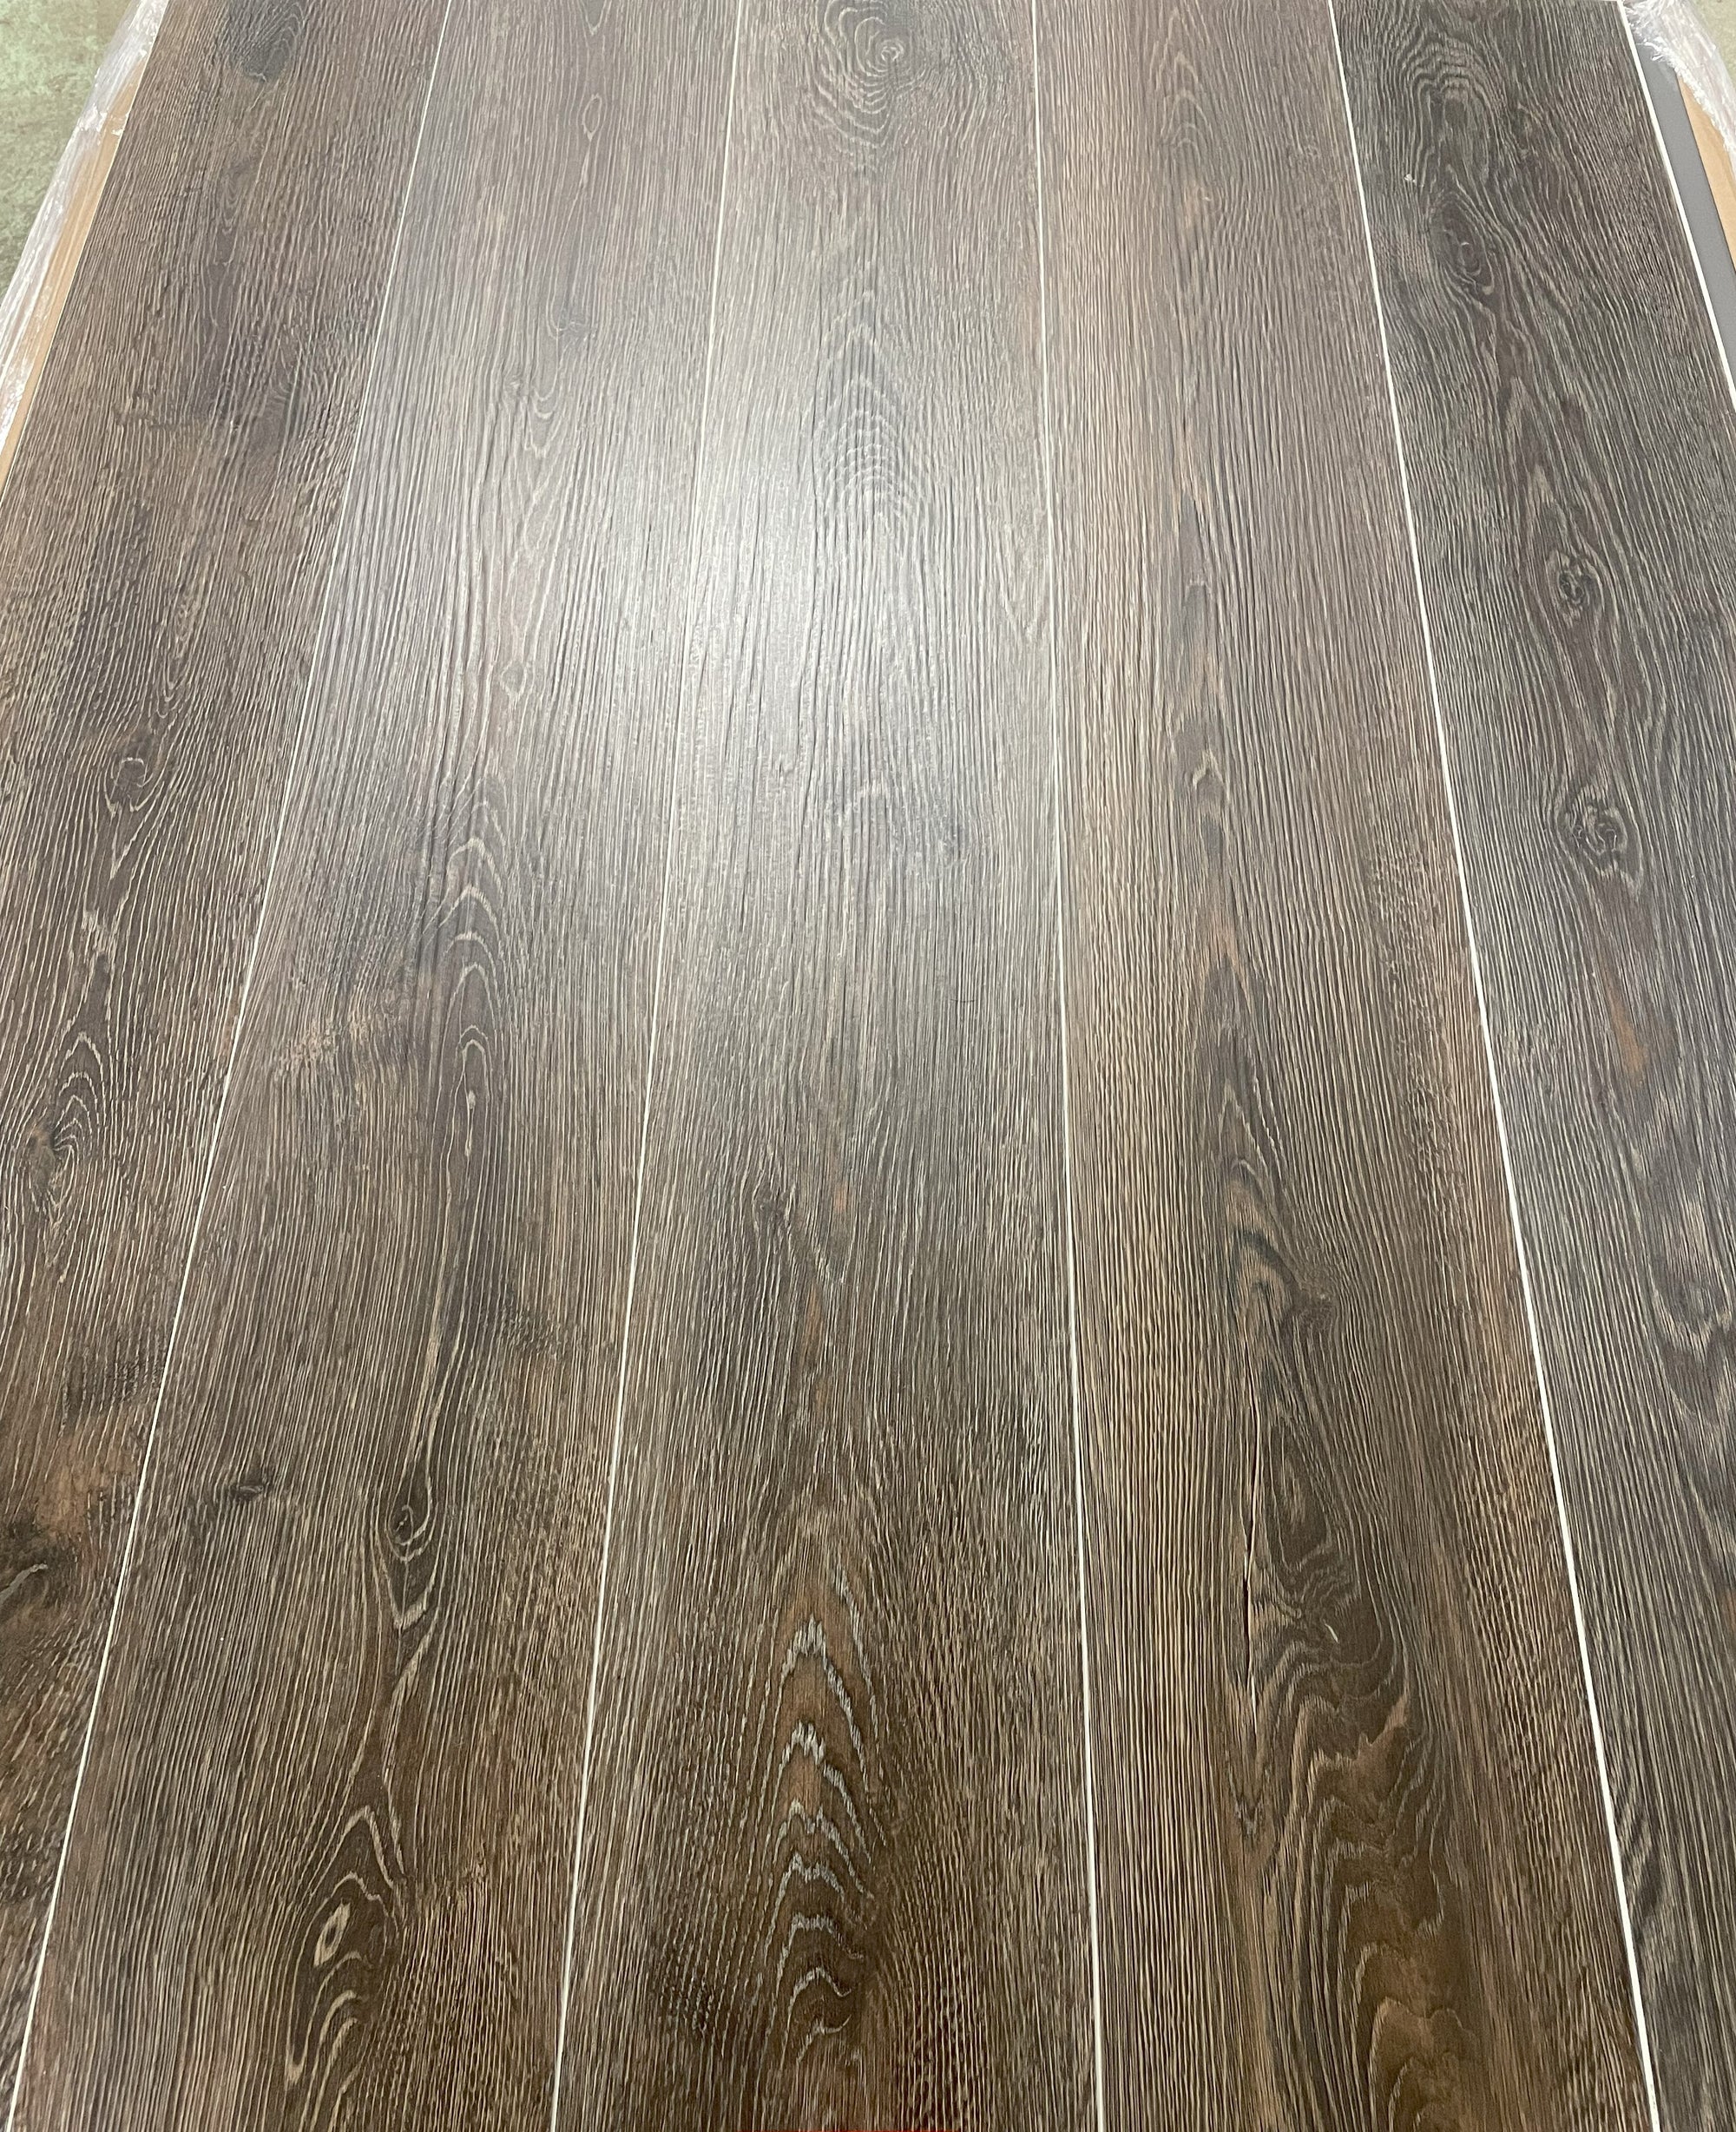 Closeout 12 mil Luxury Vinyl Plank Flooring - Tudor $1.59/sqft